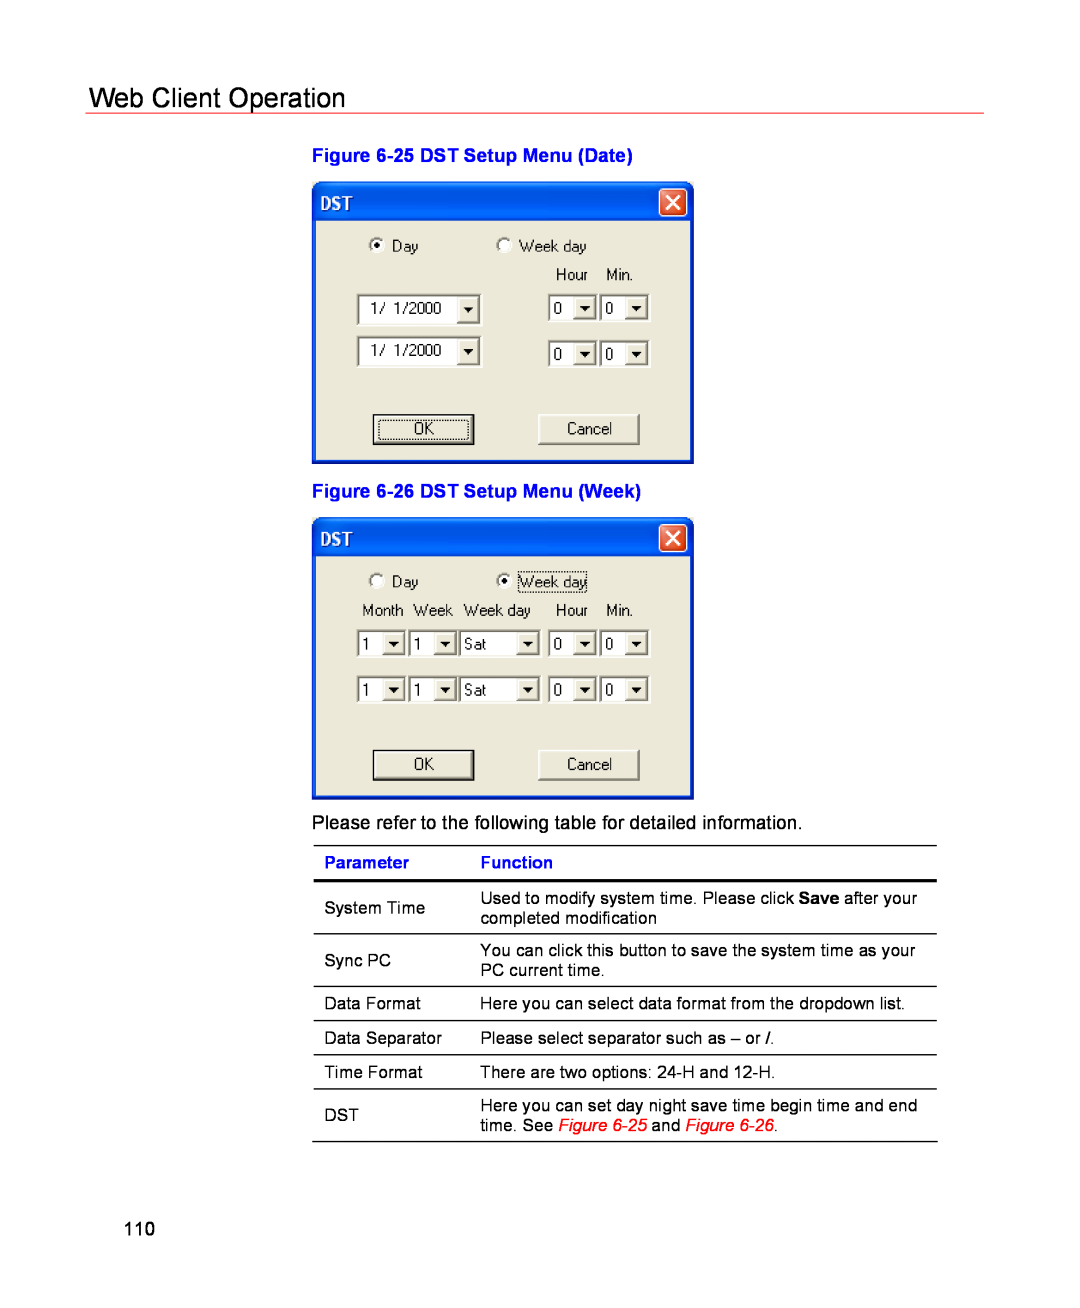 Honeywell HSVR-04, HSVR-16 Web Client Operation, 25 DST Setup Menu Date -26 DST Setup Menu Week, Parameter, Function 